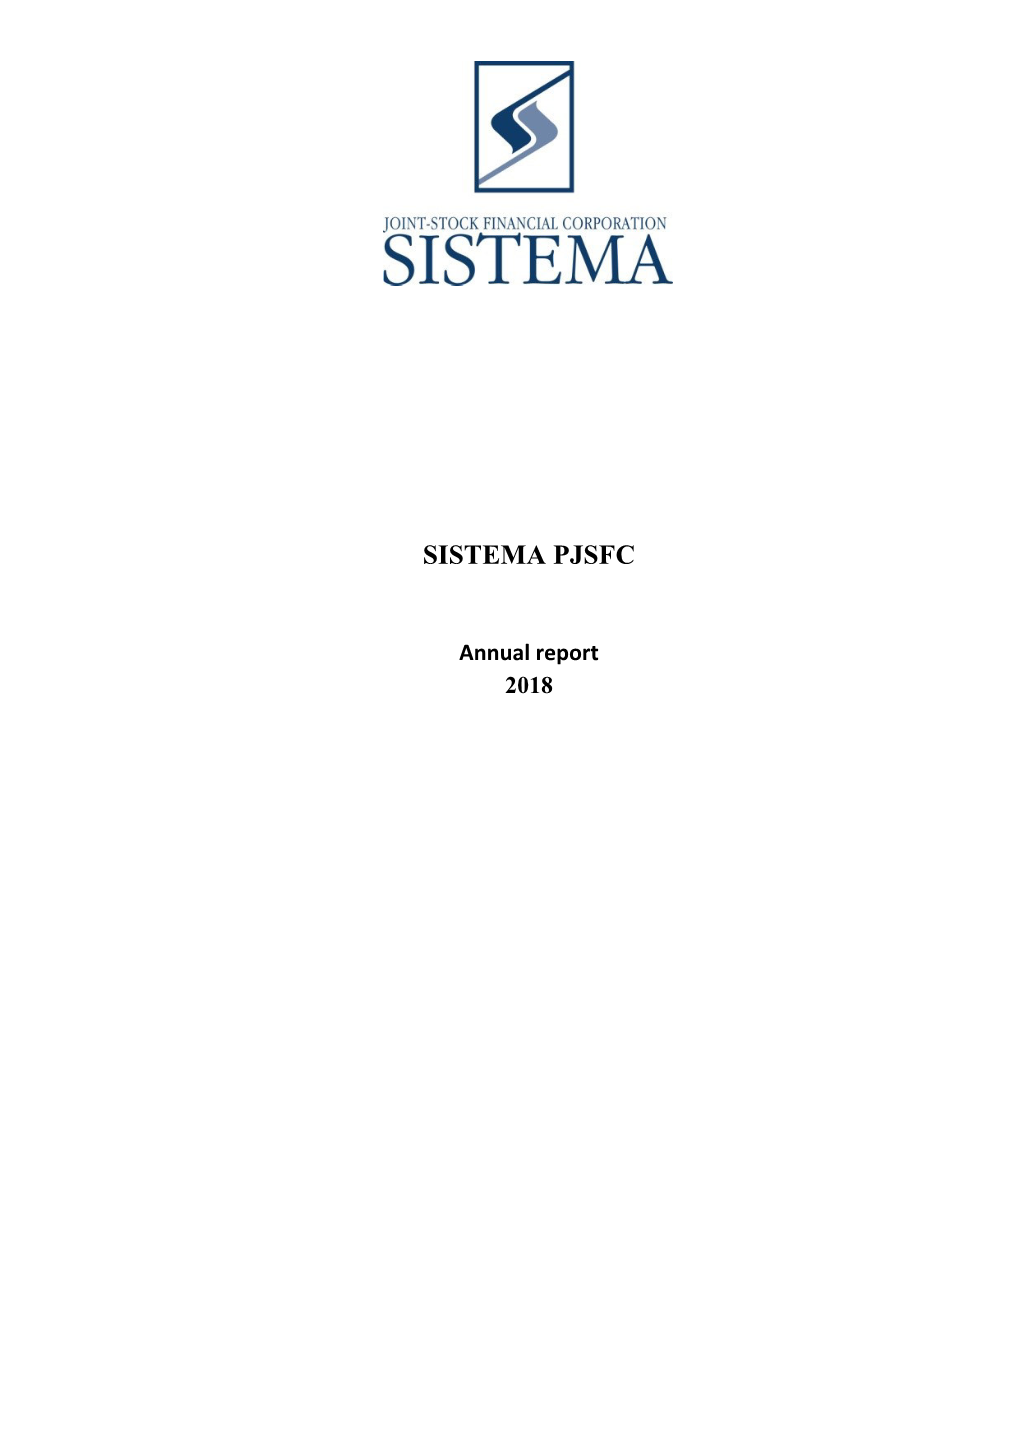 SISTEMA PJSFC Annual Report 2018